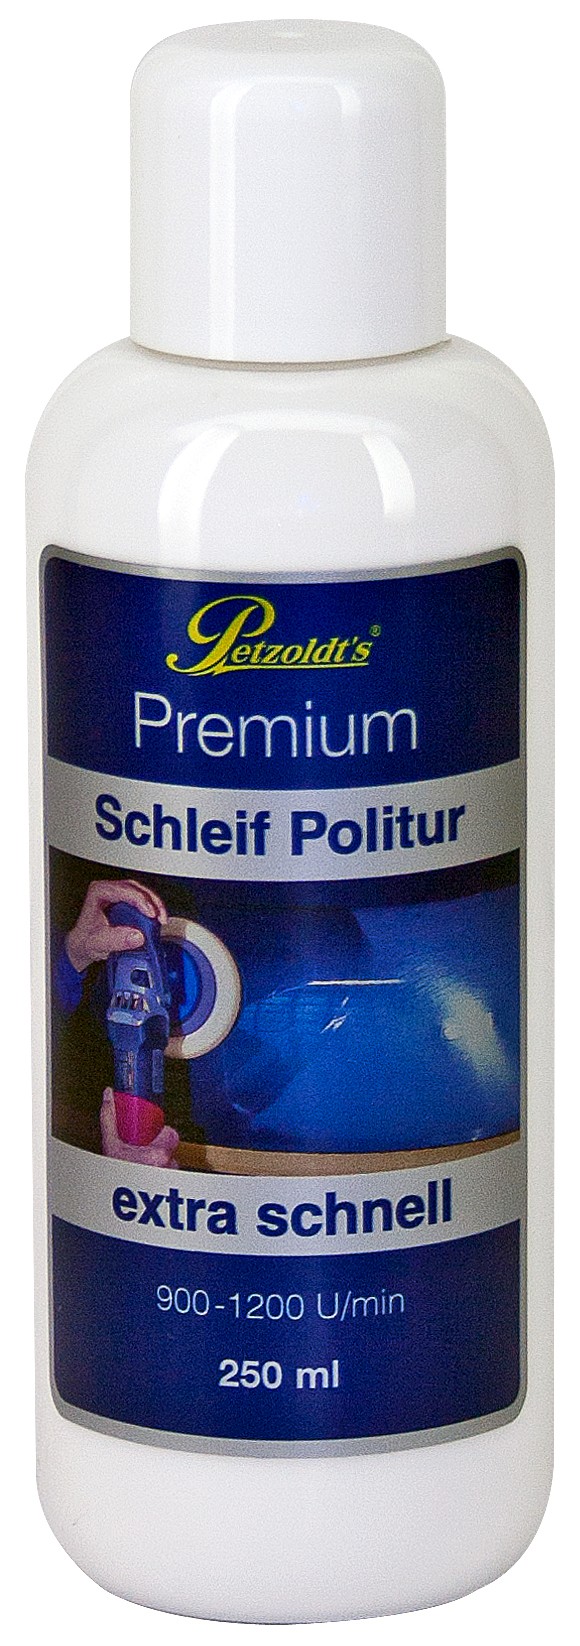 Petzoldts Schleif Politur 250ml